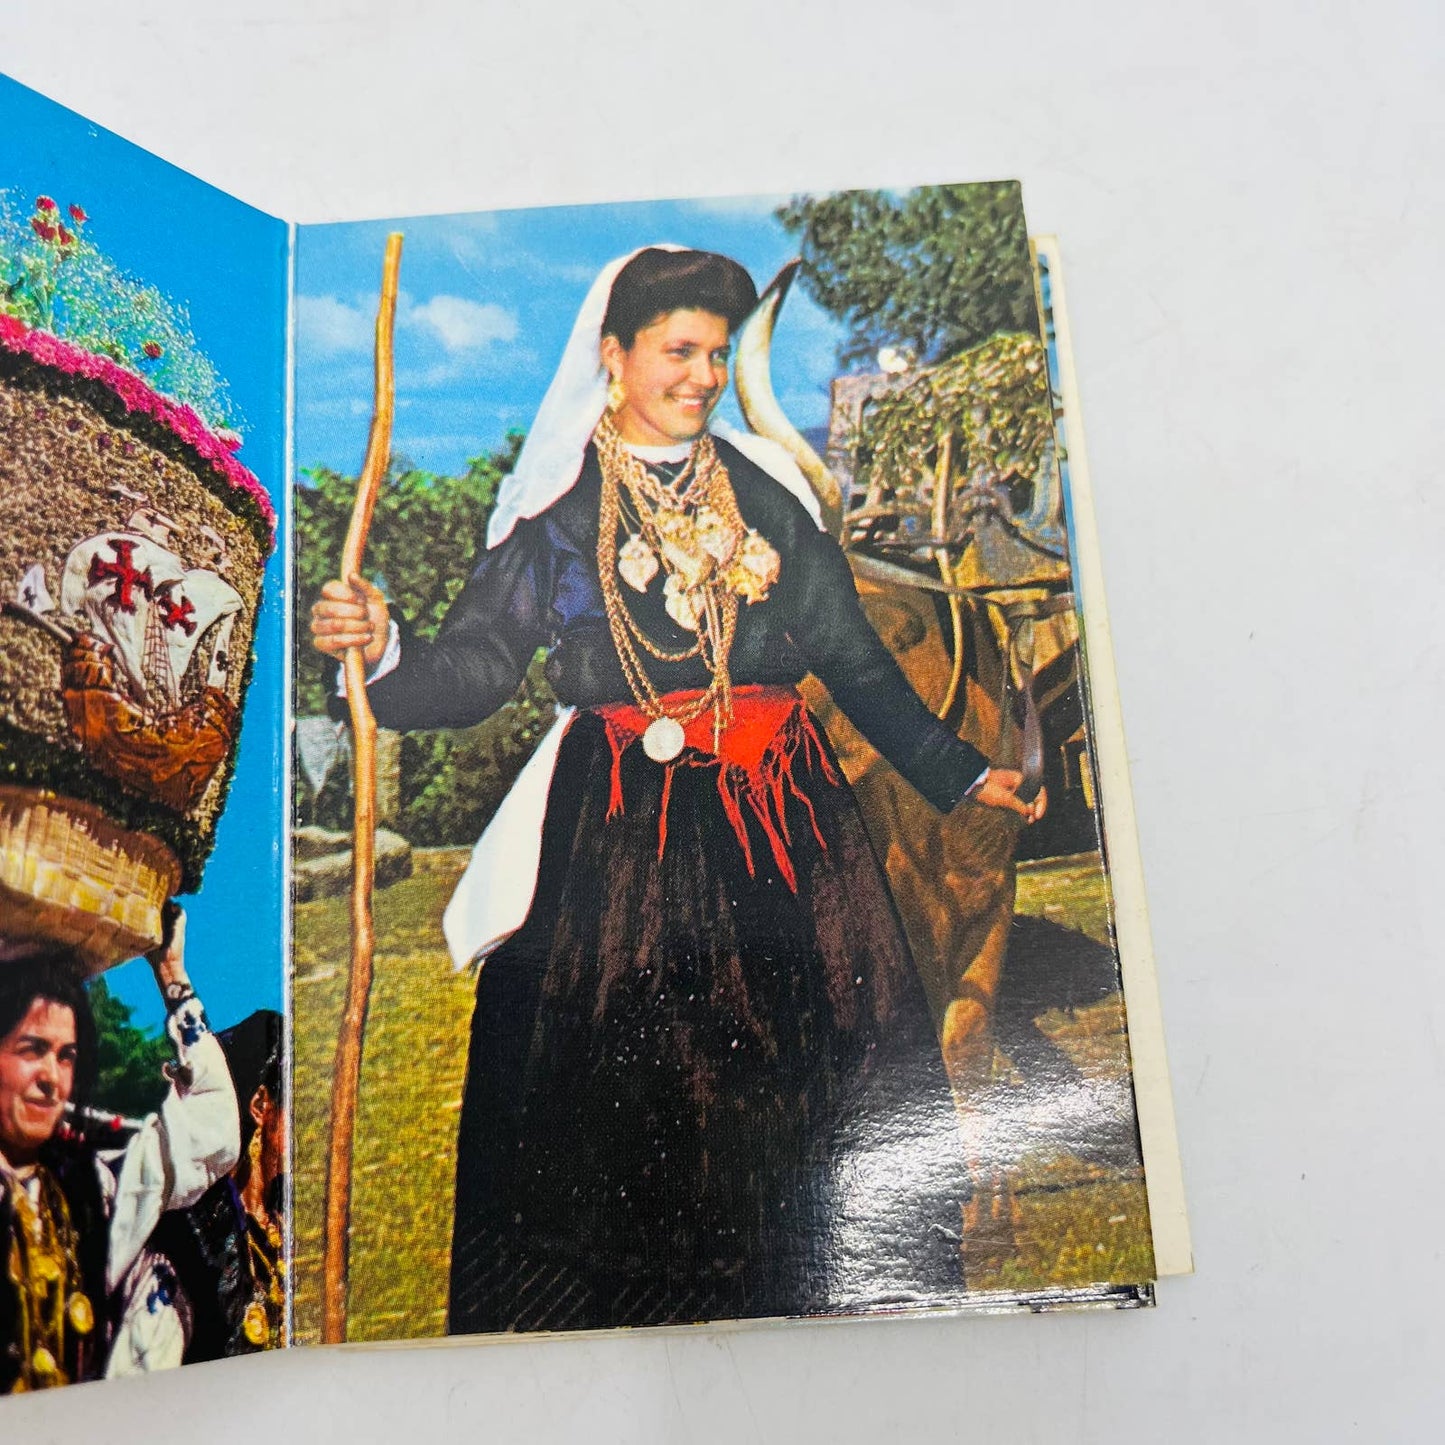 1960s Folclore Portugal Mini Photo Souvenir Booklet EA1